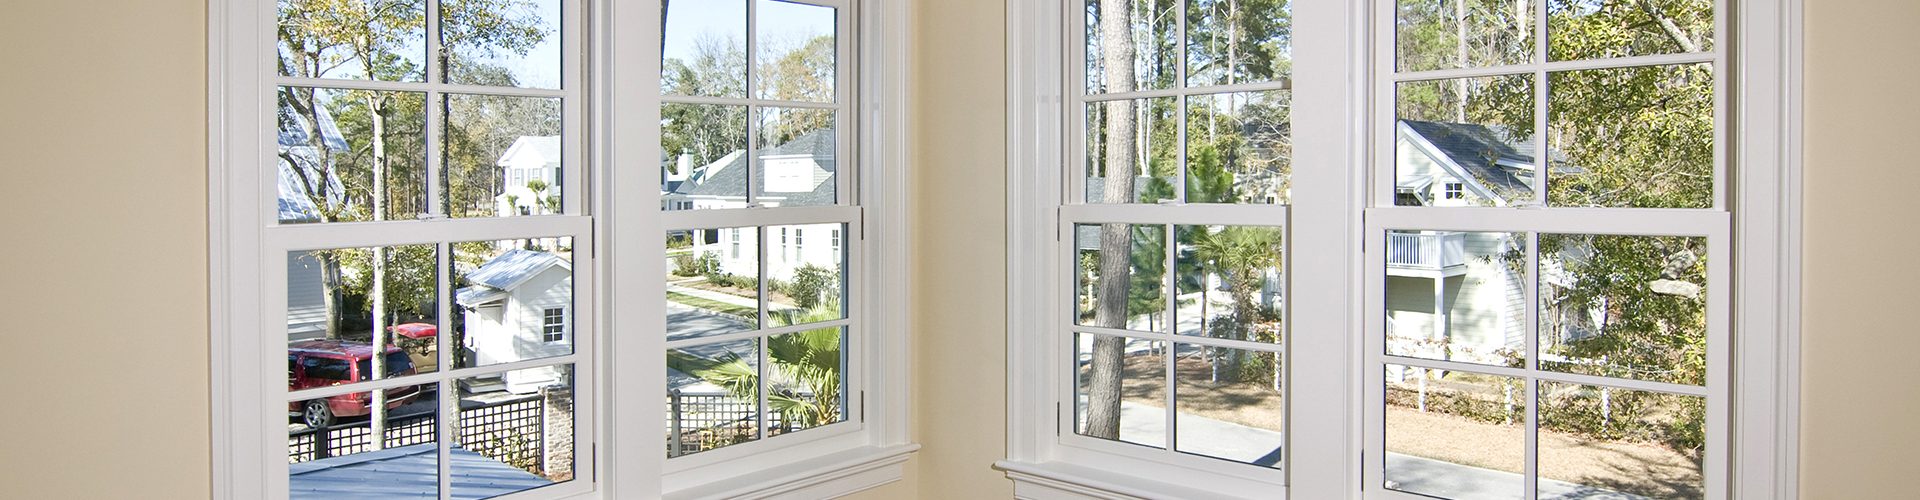 Applegate Home Improvements Windows Patio Doors Conservatories